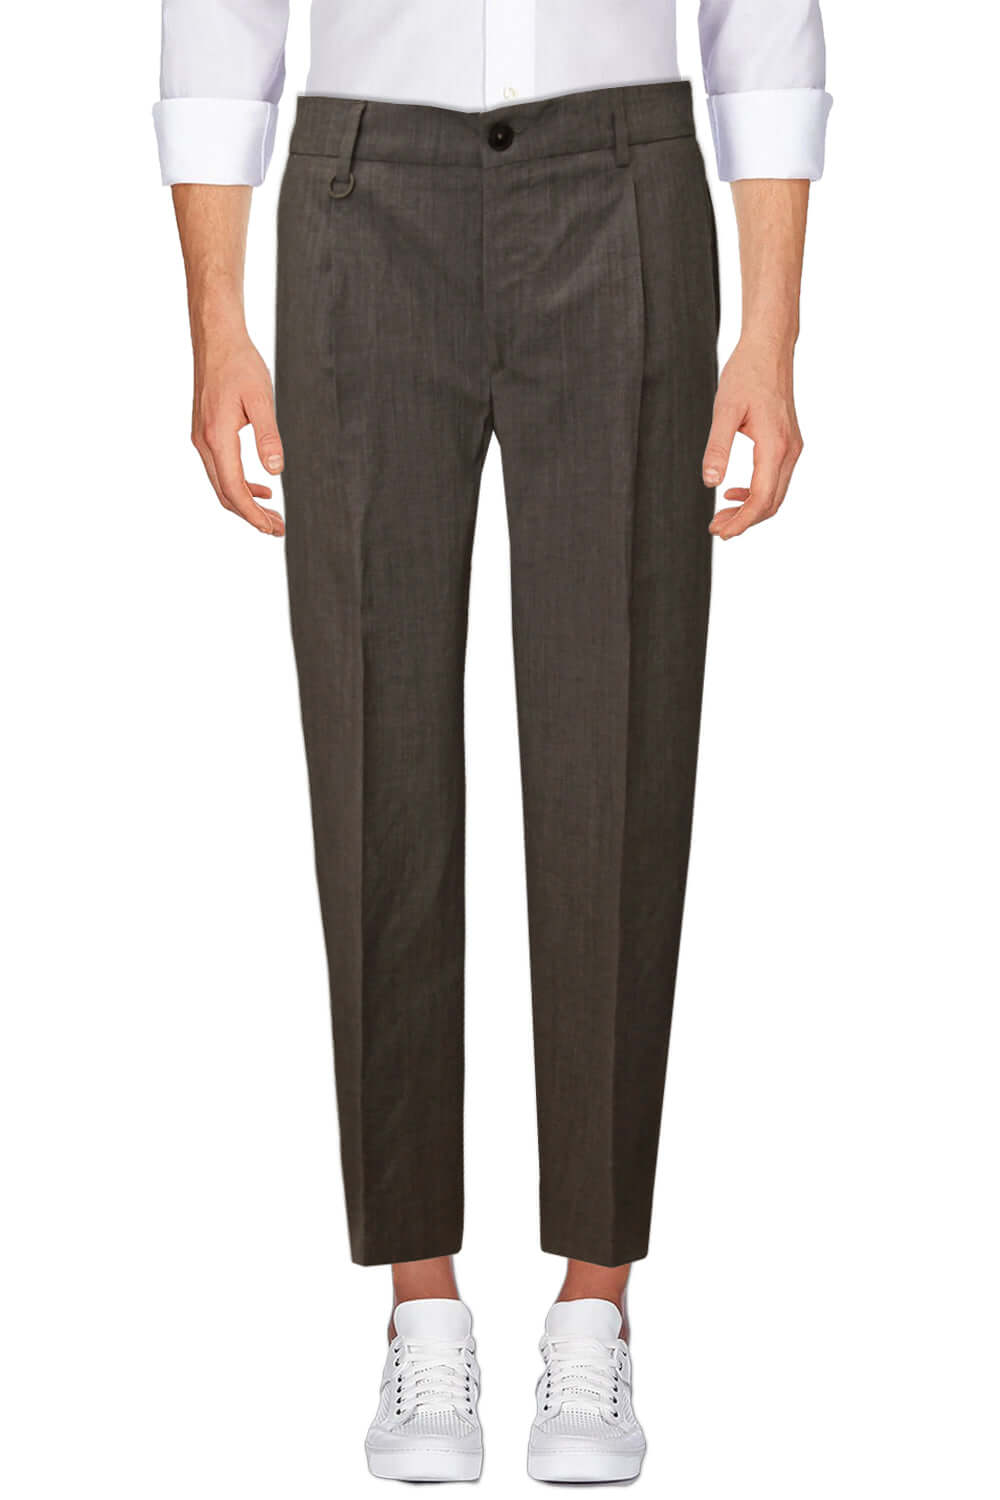 Image of Pantalone in lana e lino - BE ABLE